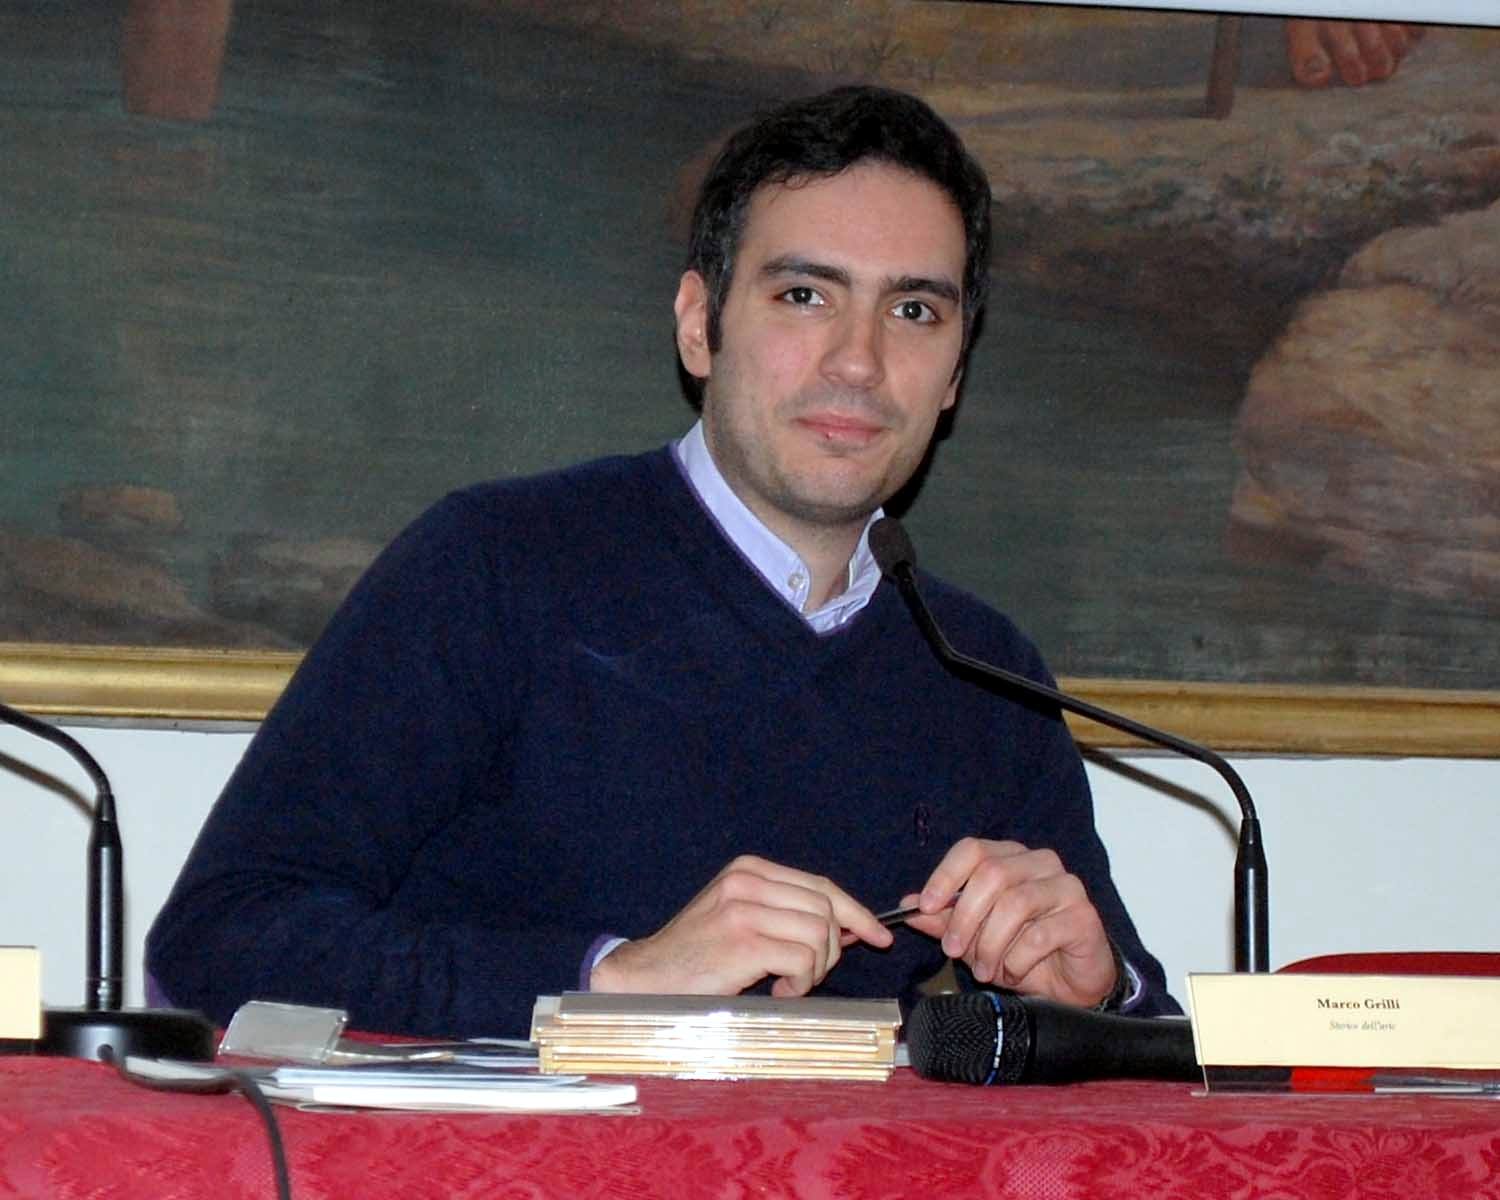 Marco Grilli